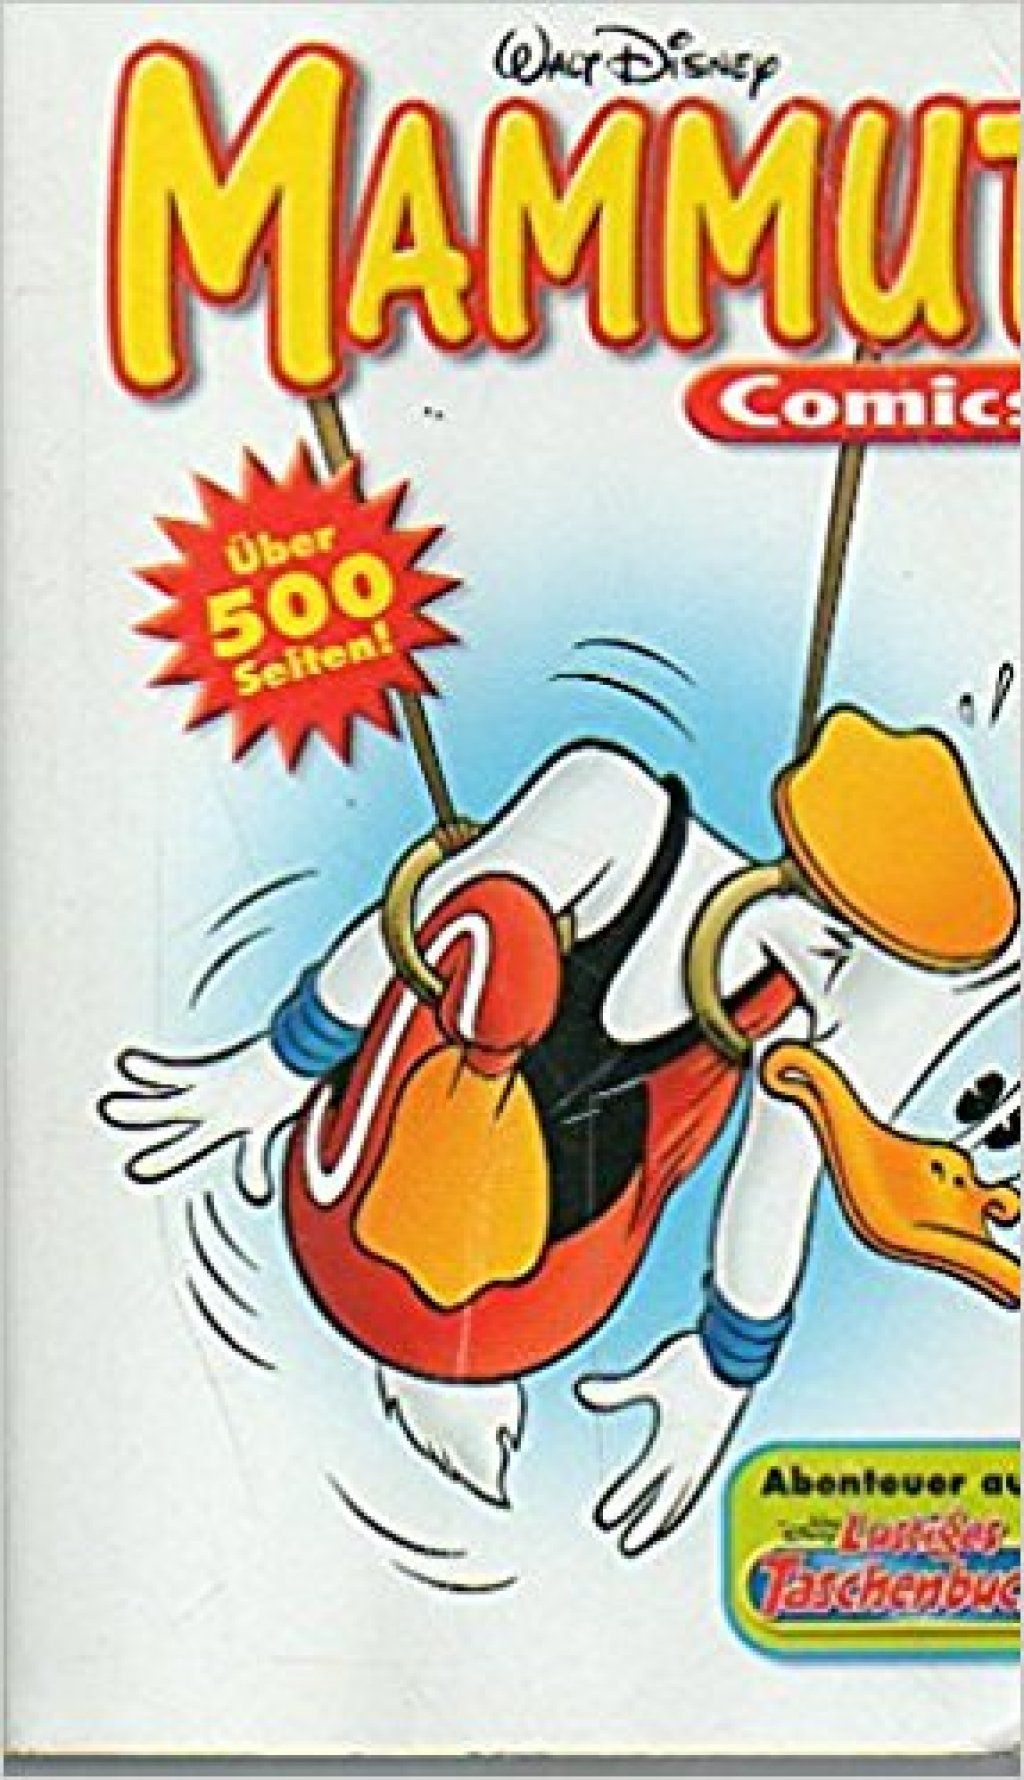 Mickey Maus หนังสือการ์ตูนขายดีการ์ตูนที่ดีที่สุดตลอดกาล